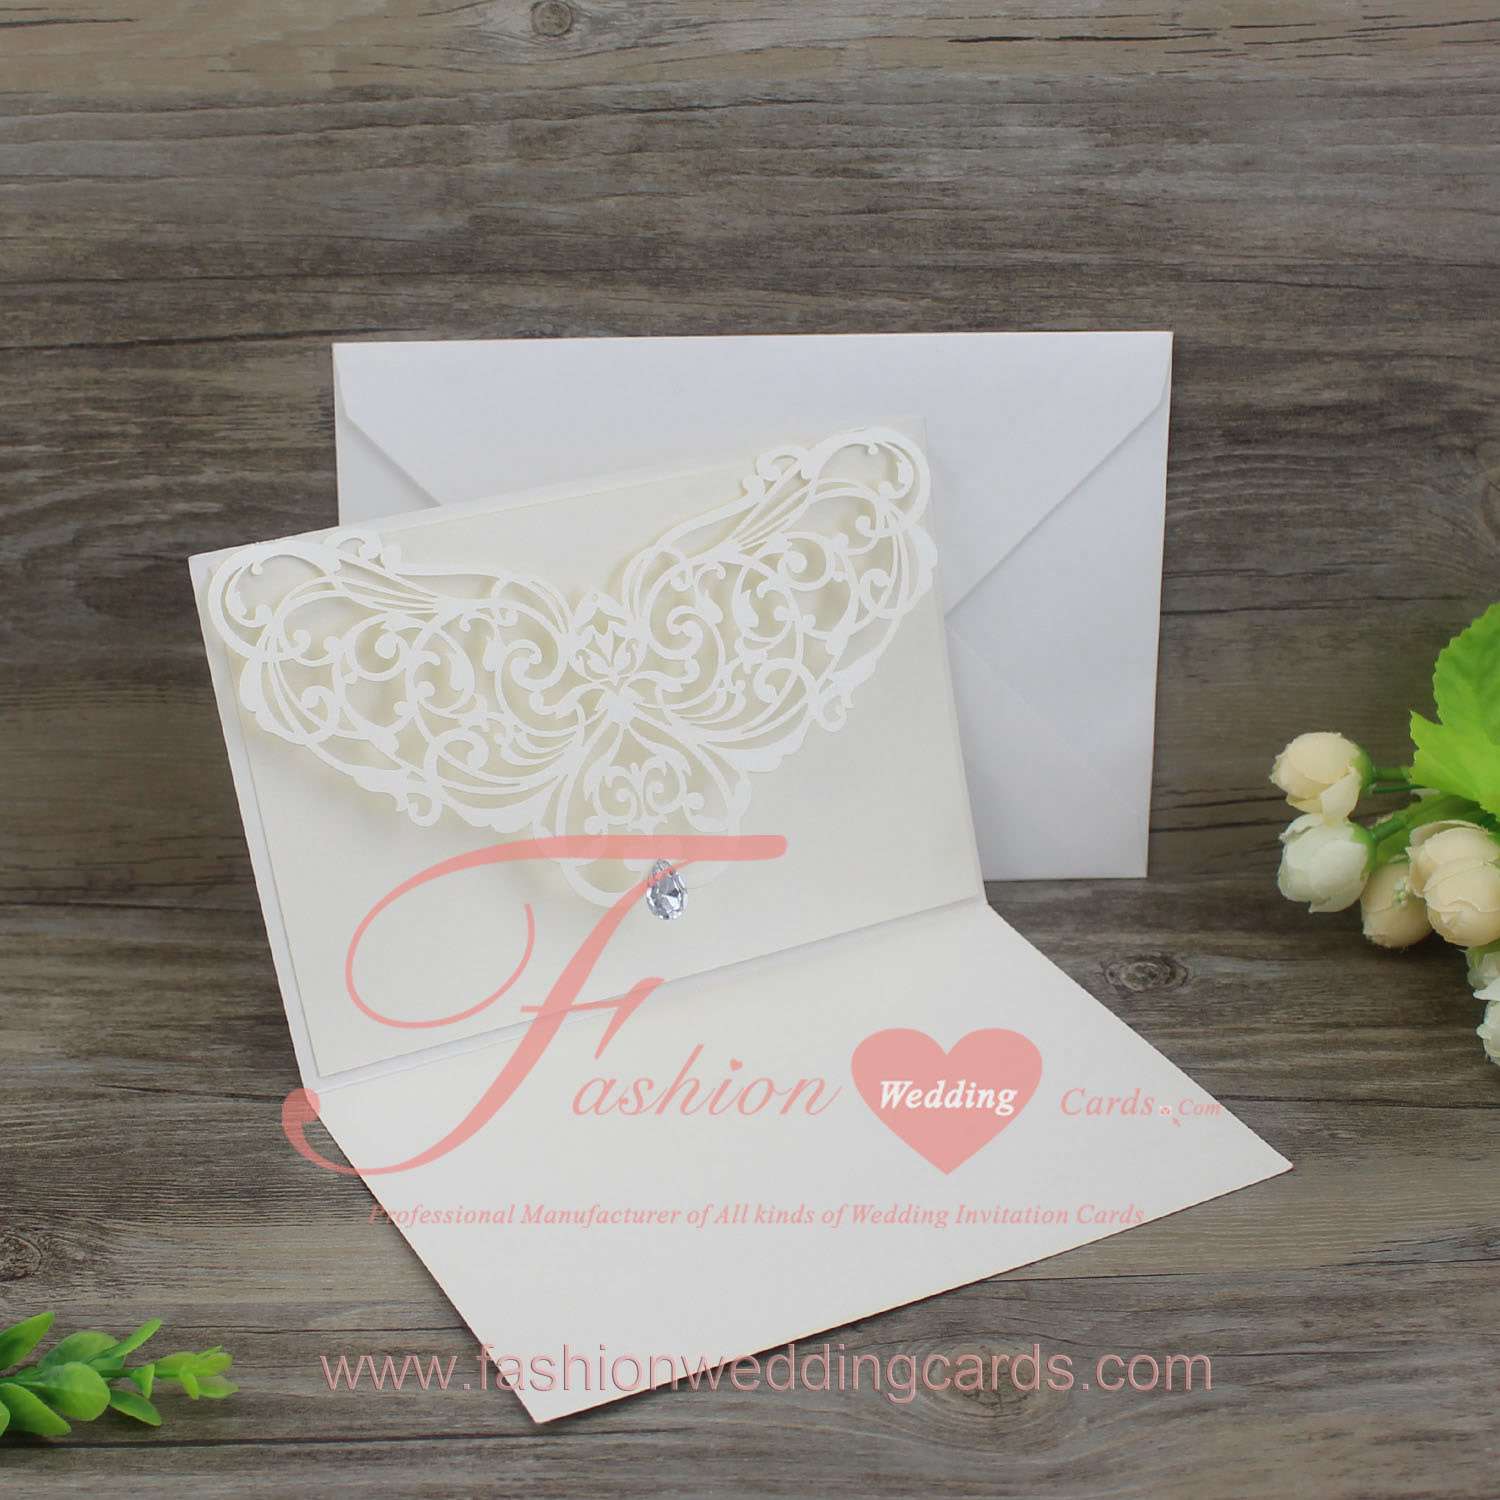 50pcs Unique Laser Cut Wedding Invitation Cards in White